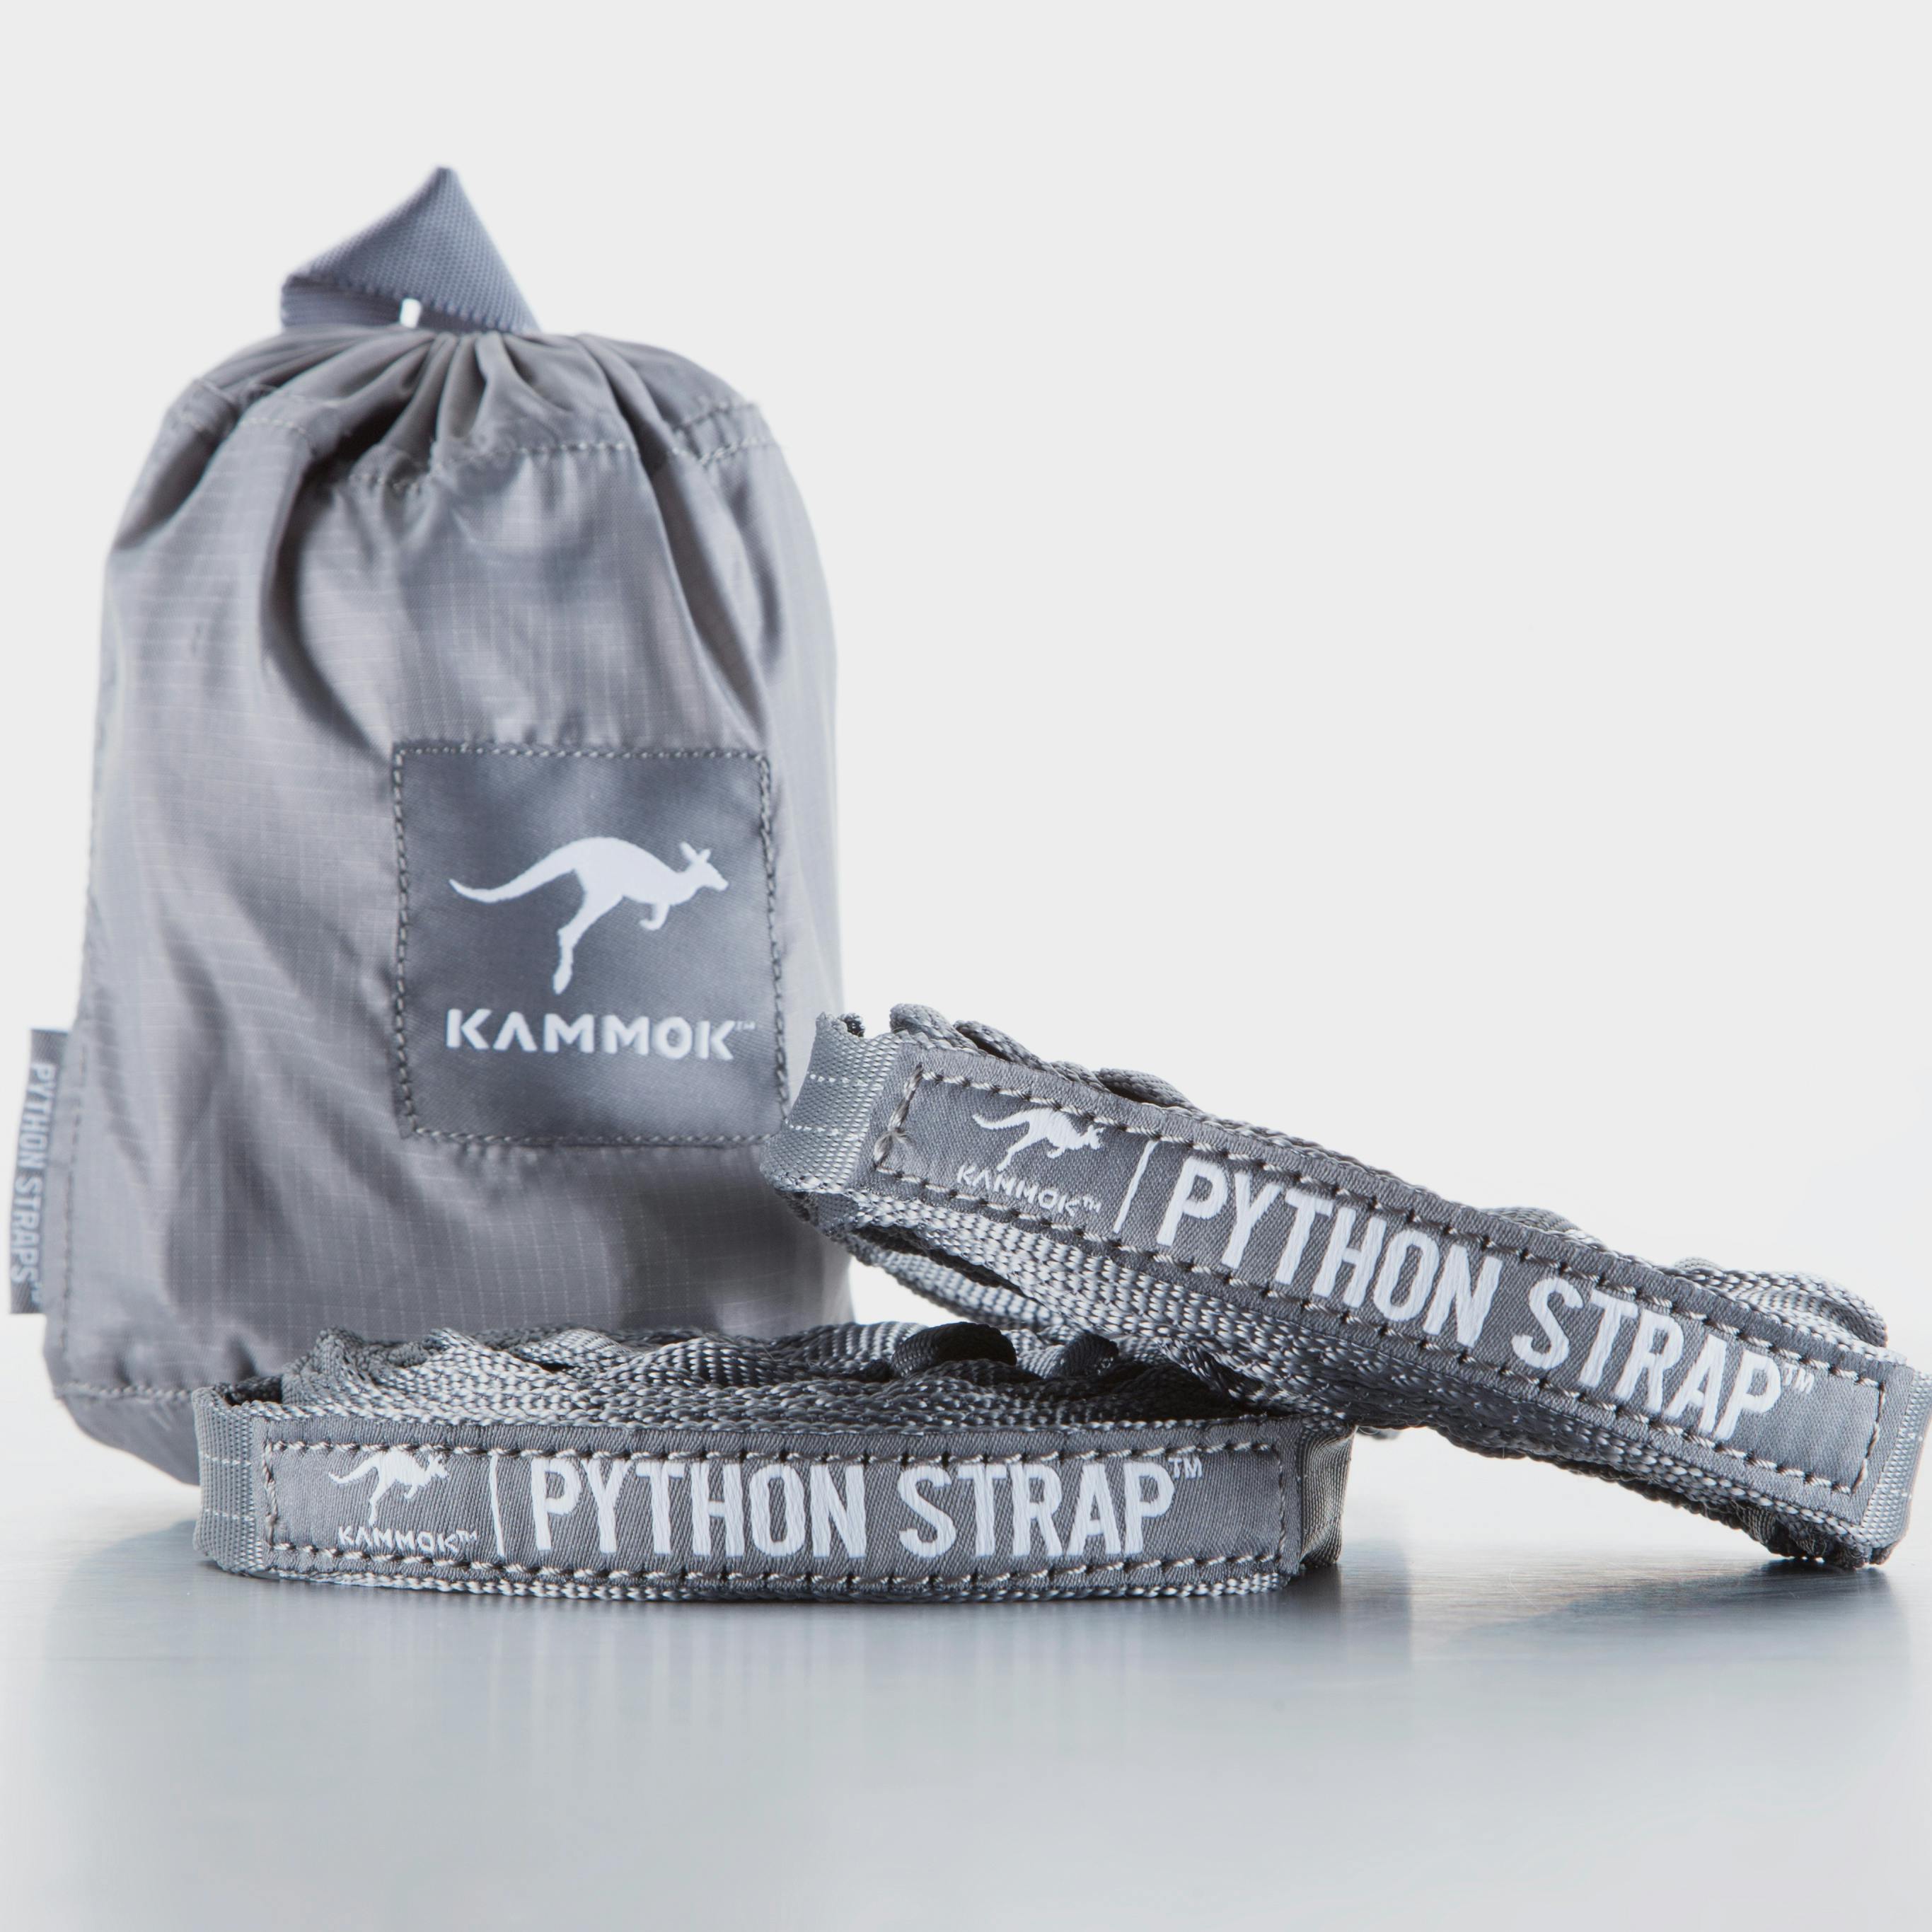 Kammok Wallaby Hammock + Python straps